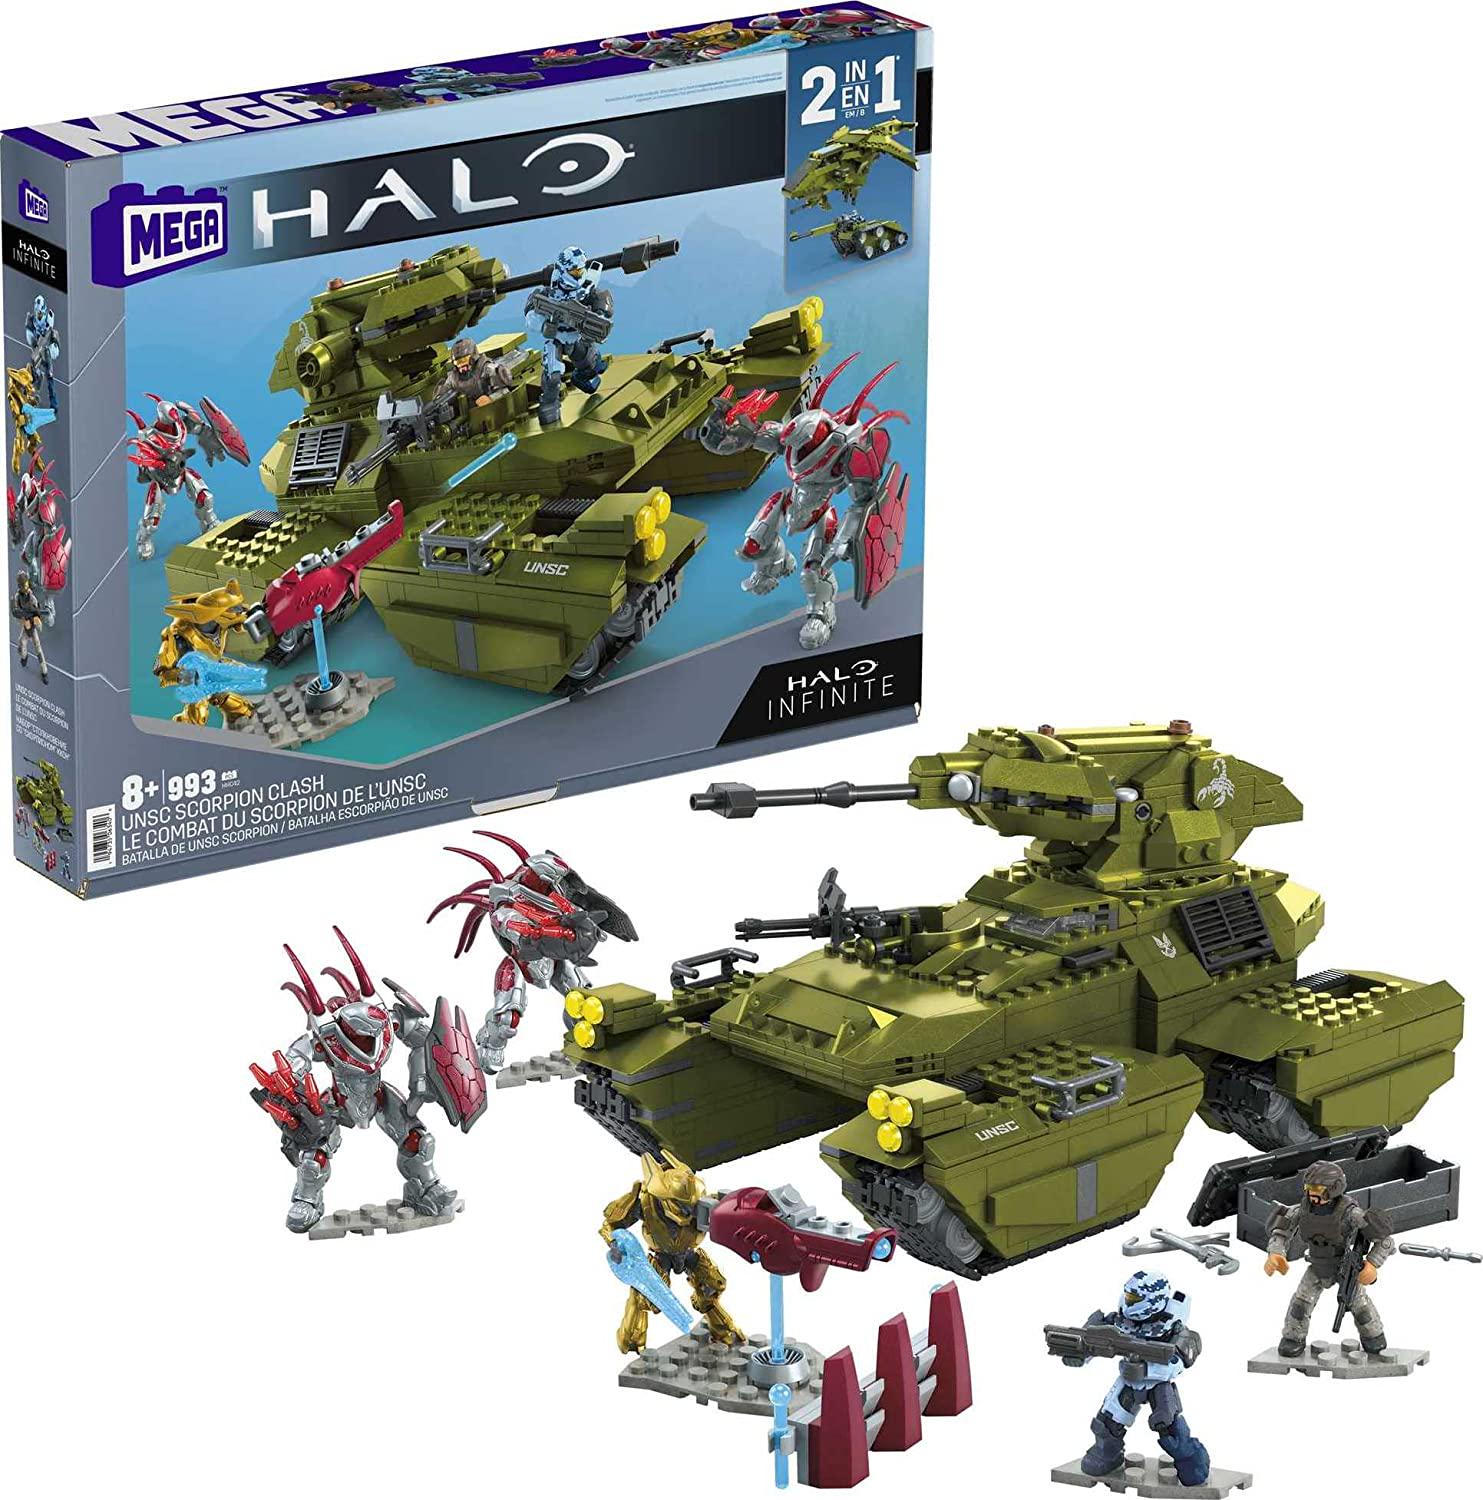 Mega Brands, Mega Brands Halo UNSC Scorpion Clash Vehicle 2-in-1 Halo Infinite Construction Set, Building Toys for Boys, Ages 8+, Multicolor (HHC42)